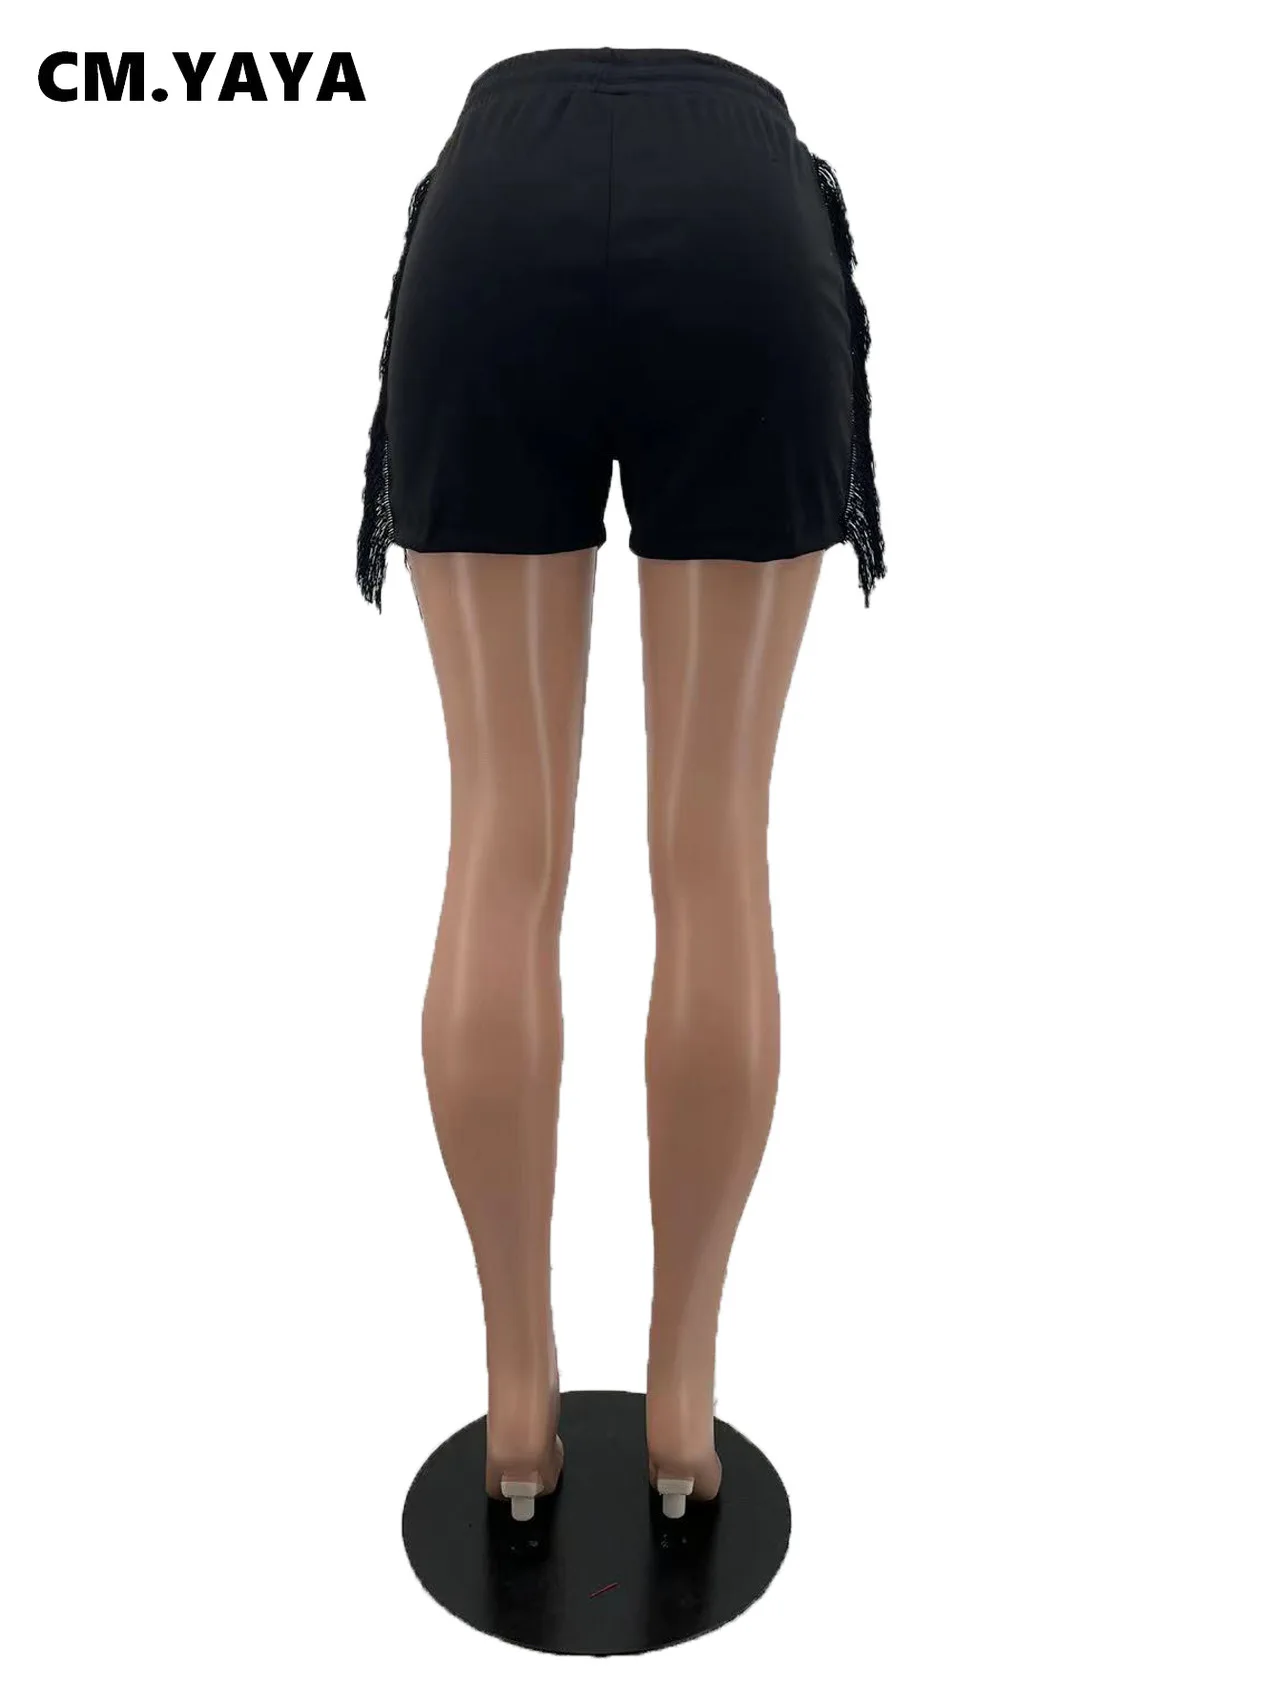 CM.YAYA Active Elegant Tassel Side Shorts for Women 2022 Summer Elastic Waist Basic Sport Street Short Pants Trousers bike shorts